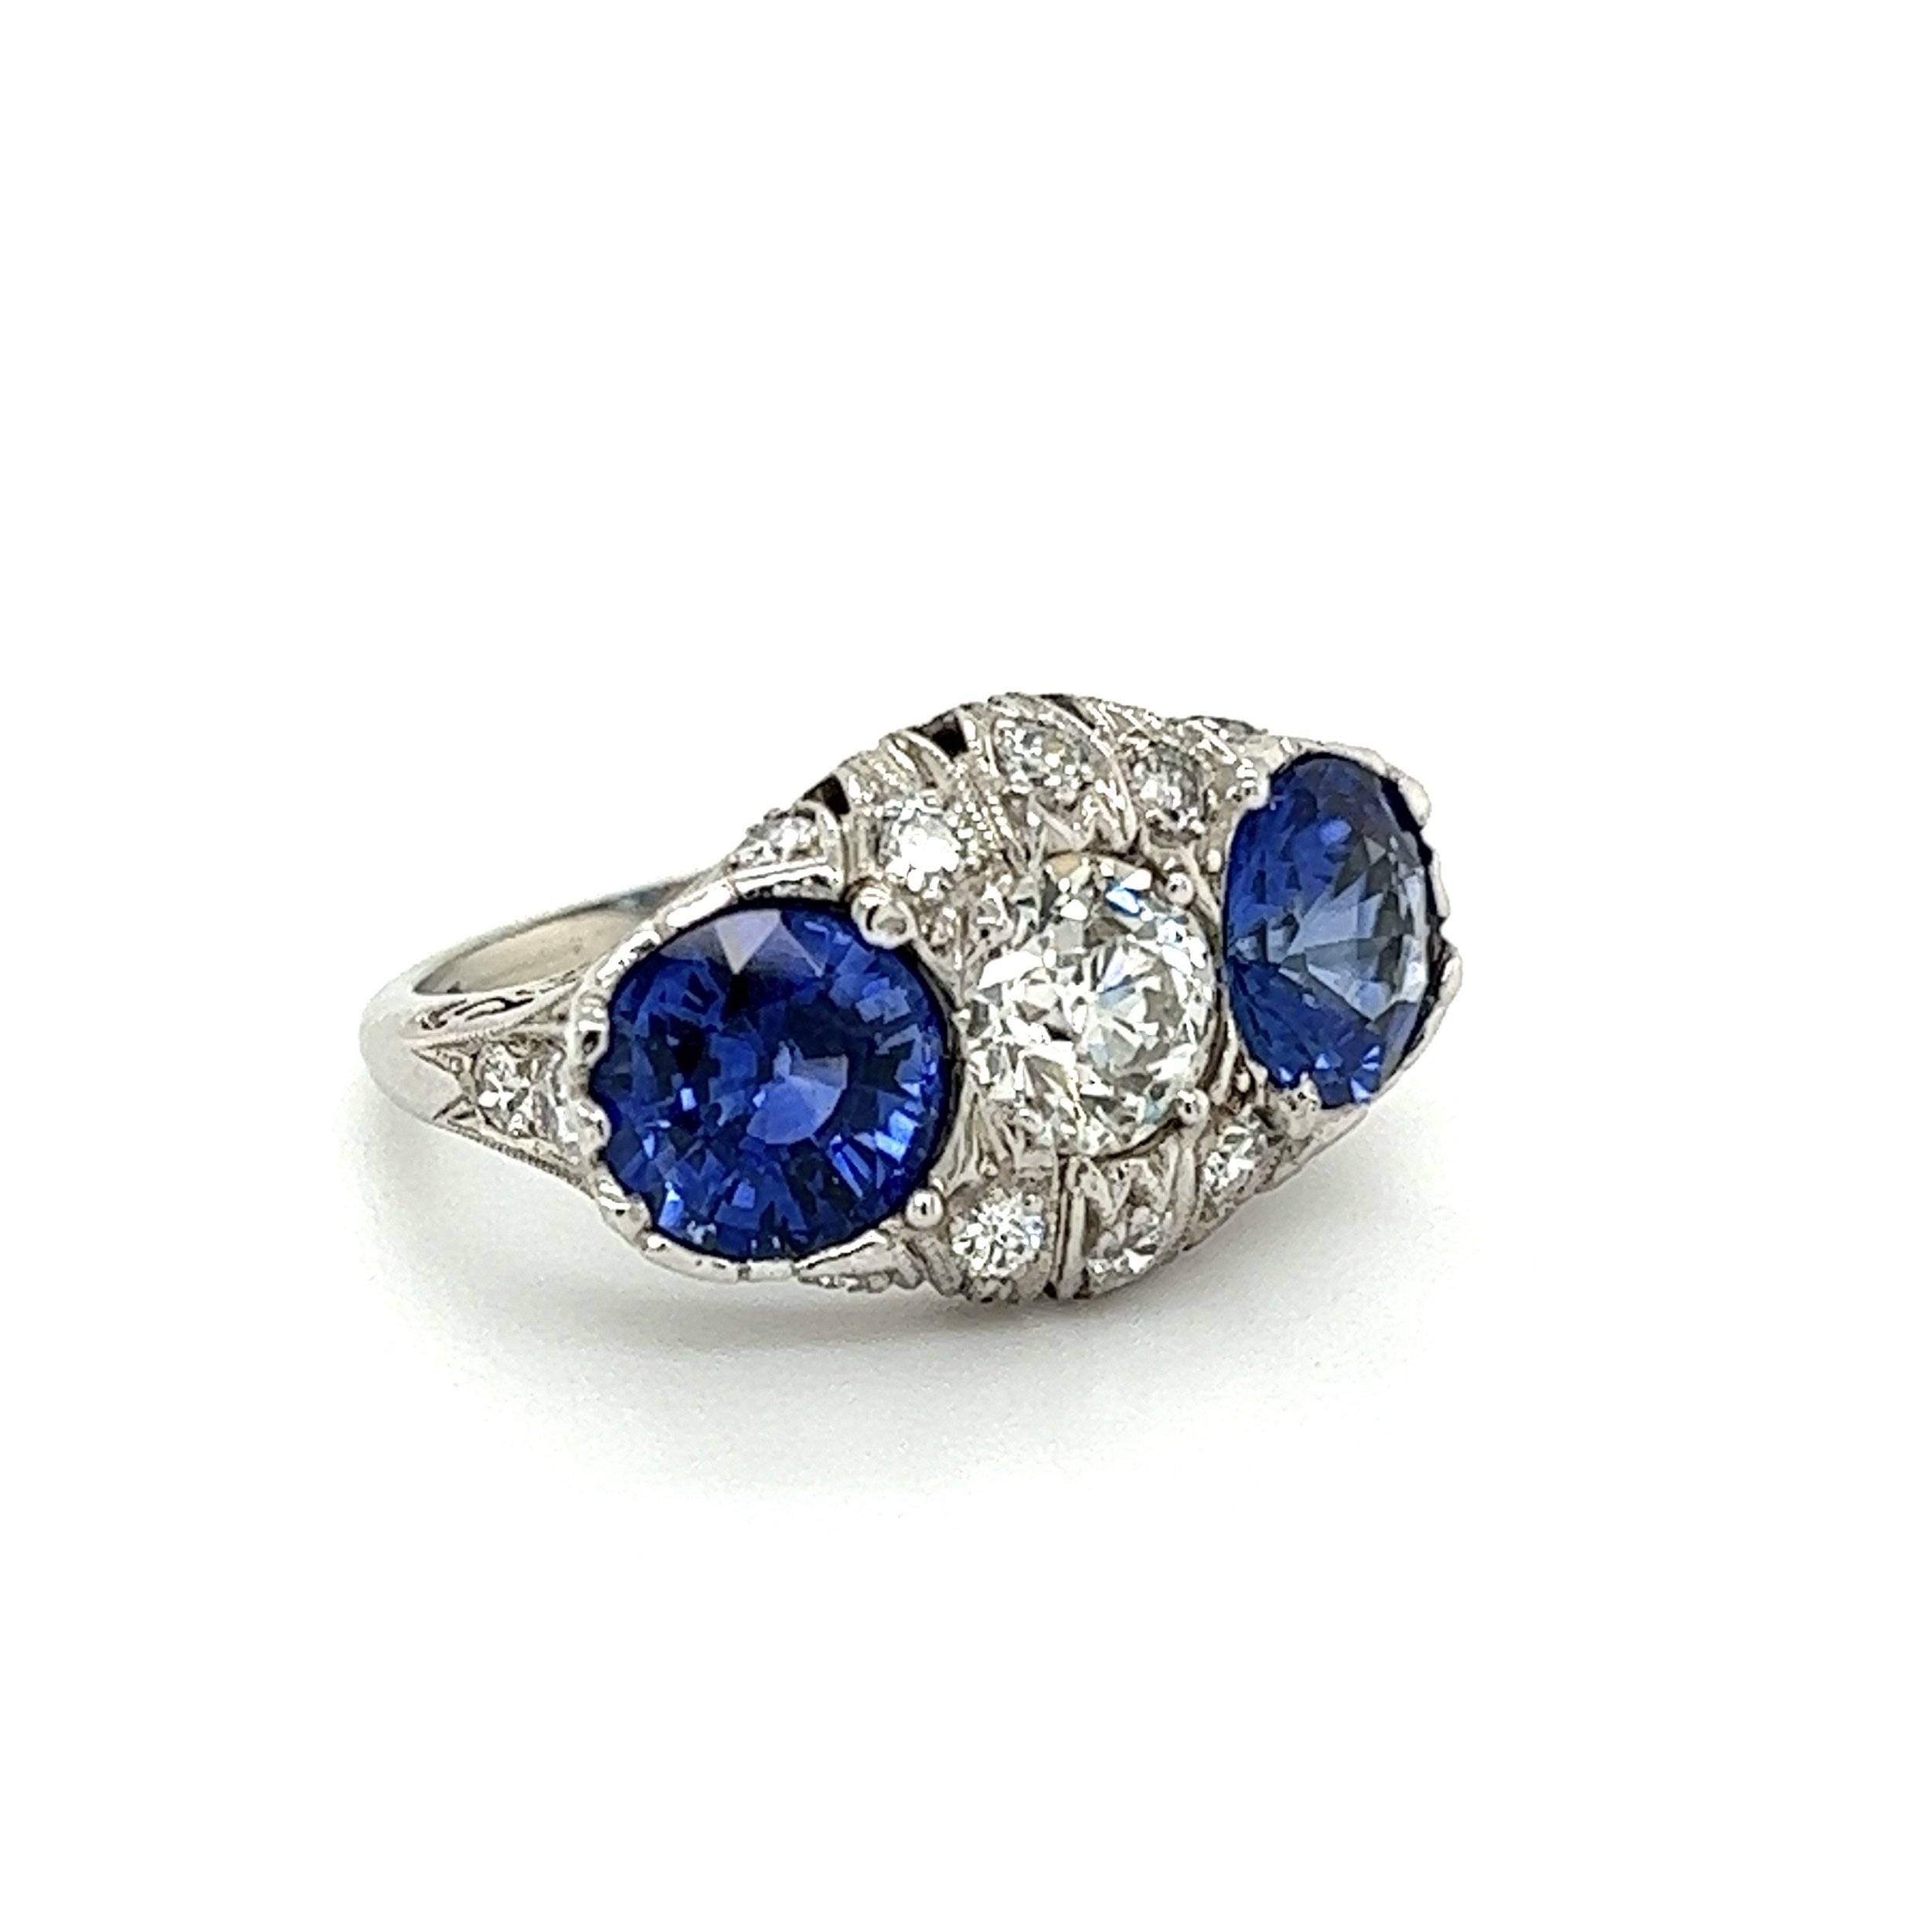 Platinum Art Deco 3.16tcw Sapphire & 1.55tcw Diamond Ring 6.5g, s6.25